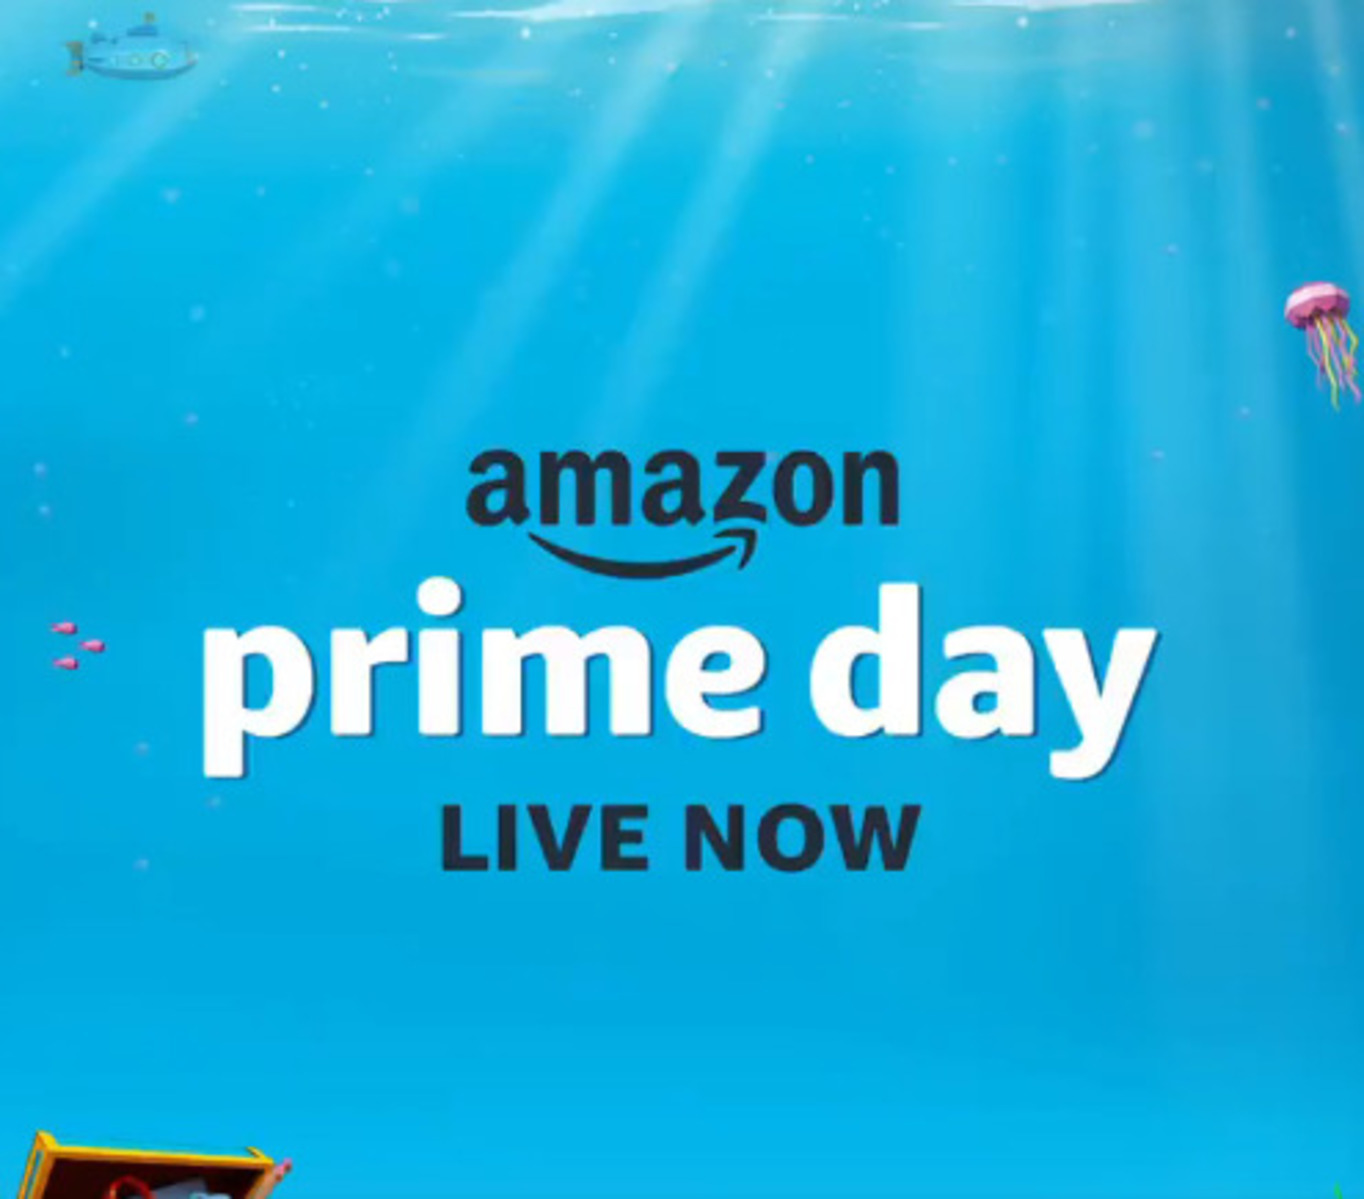 Amazon Prime Day Sale 2021 is live